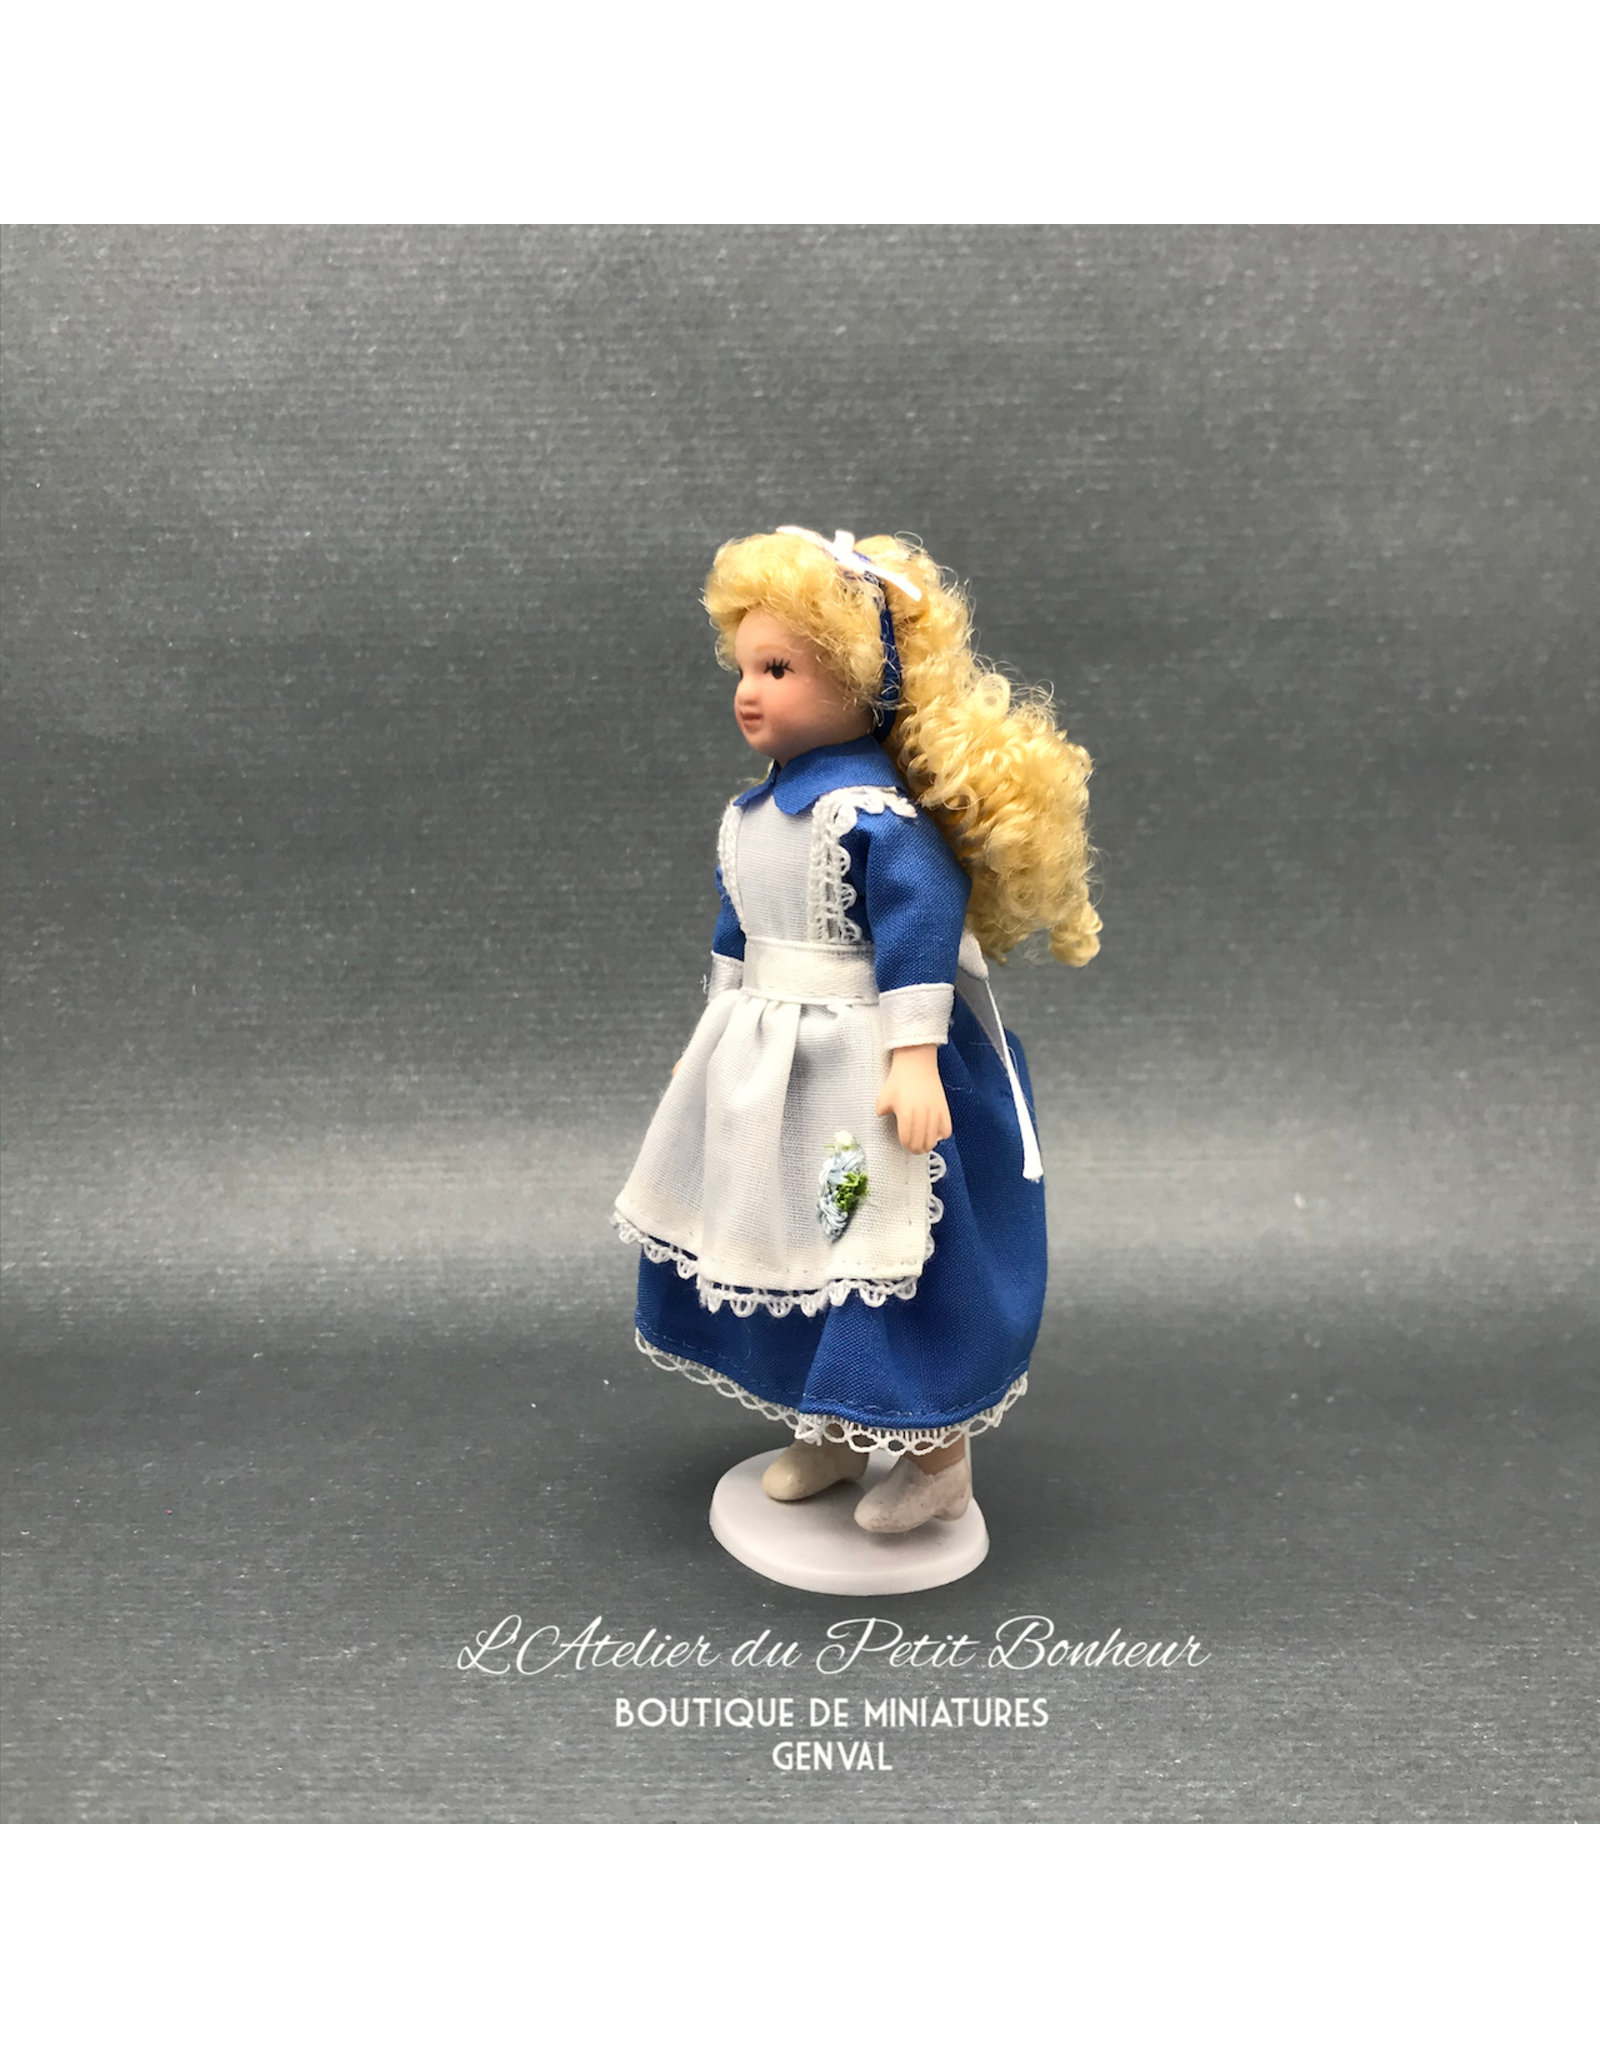 Petite fille robe bleue tablier blanc miniature 1:12